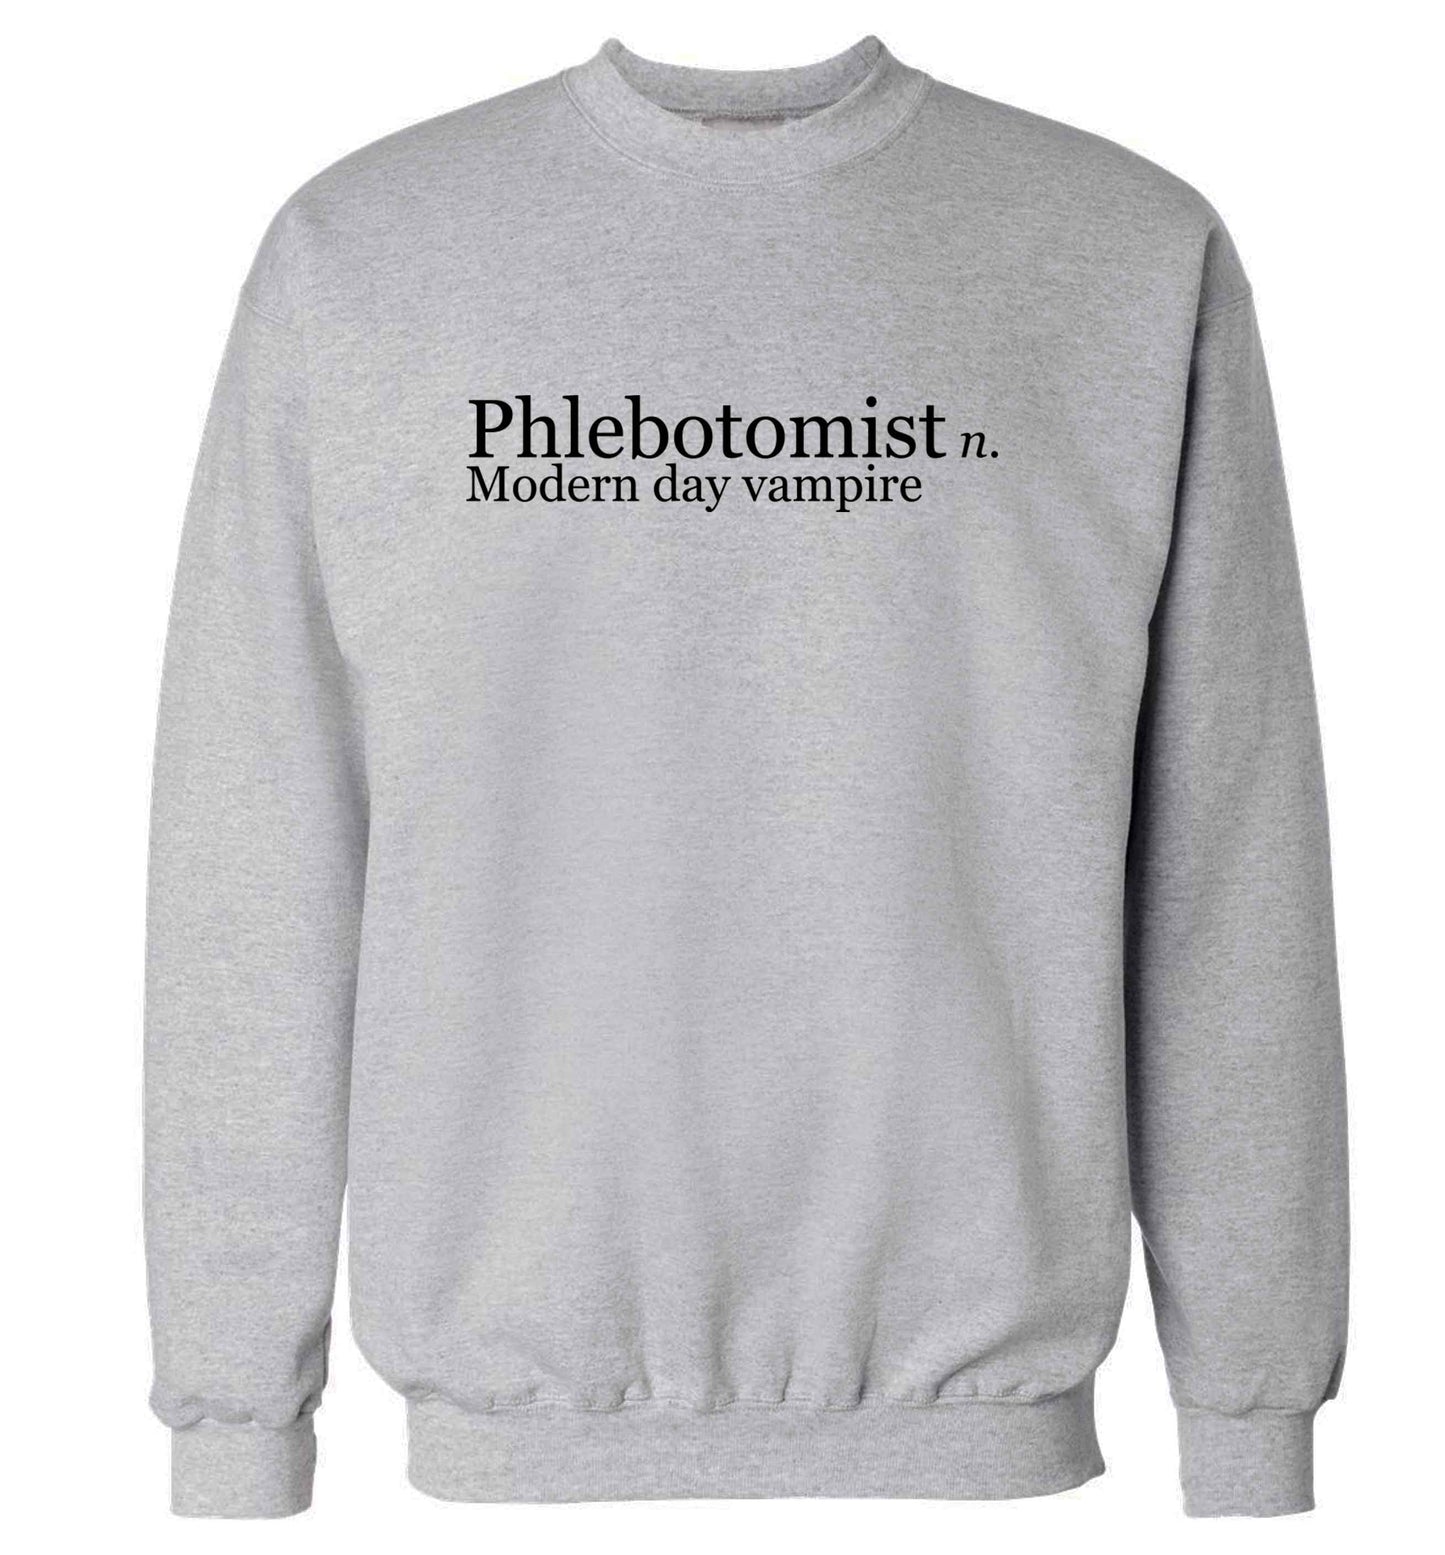 Phlebotomist - Modern day vampire adult's unisex grey sweater 2XL